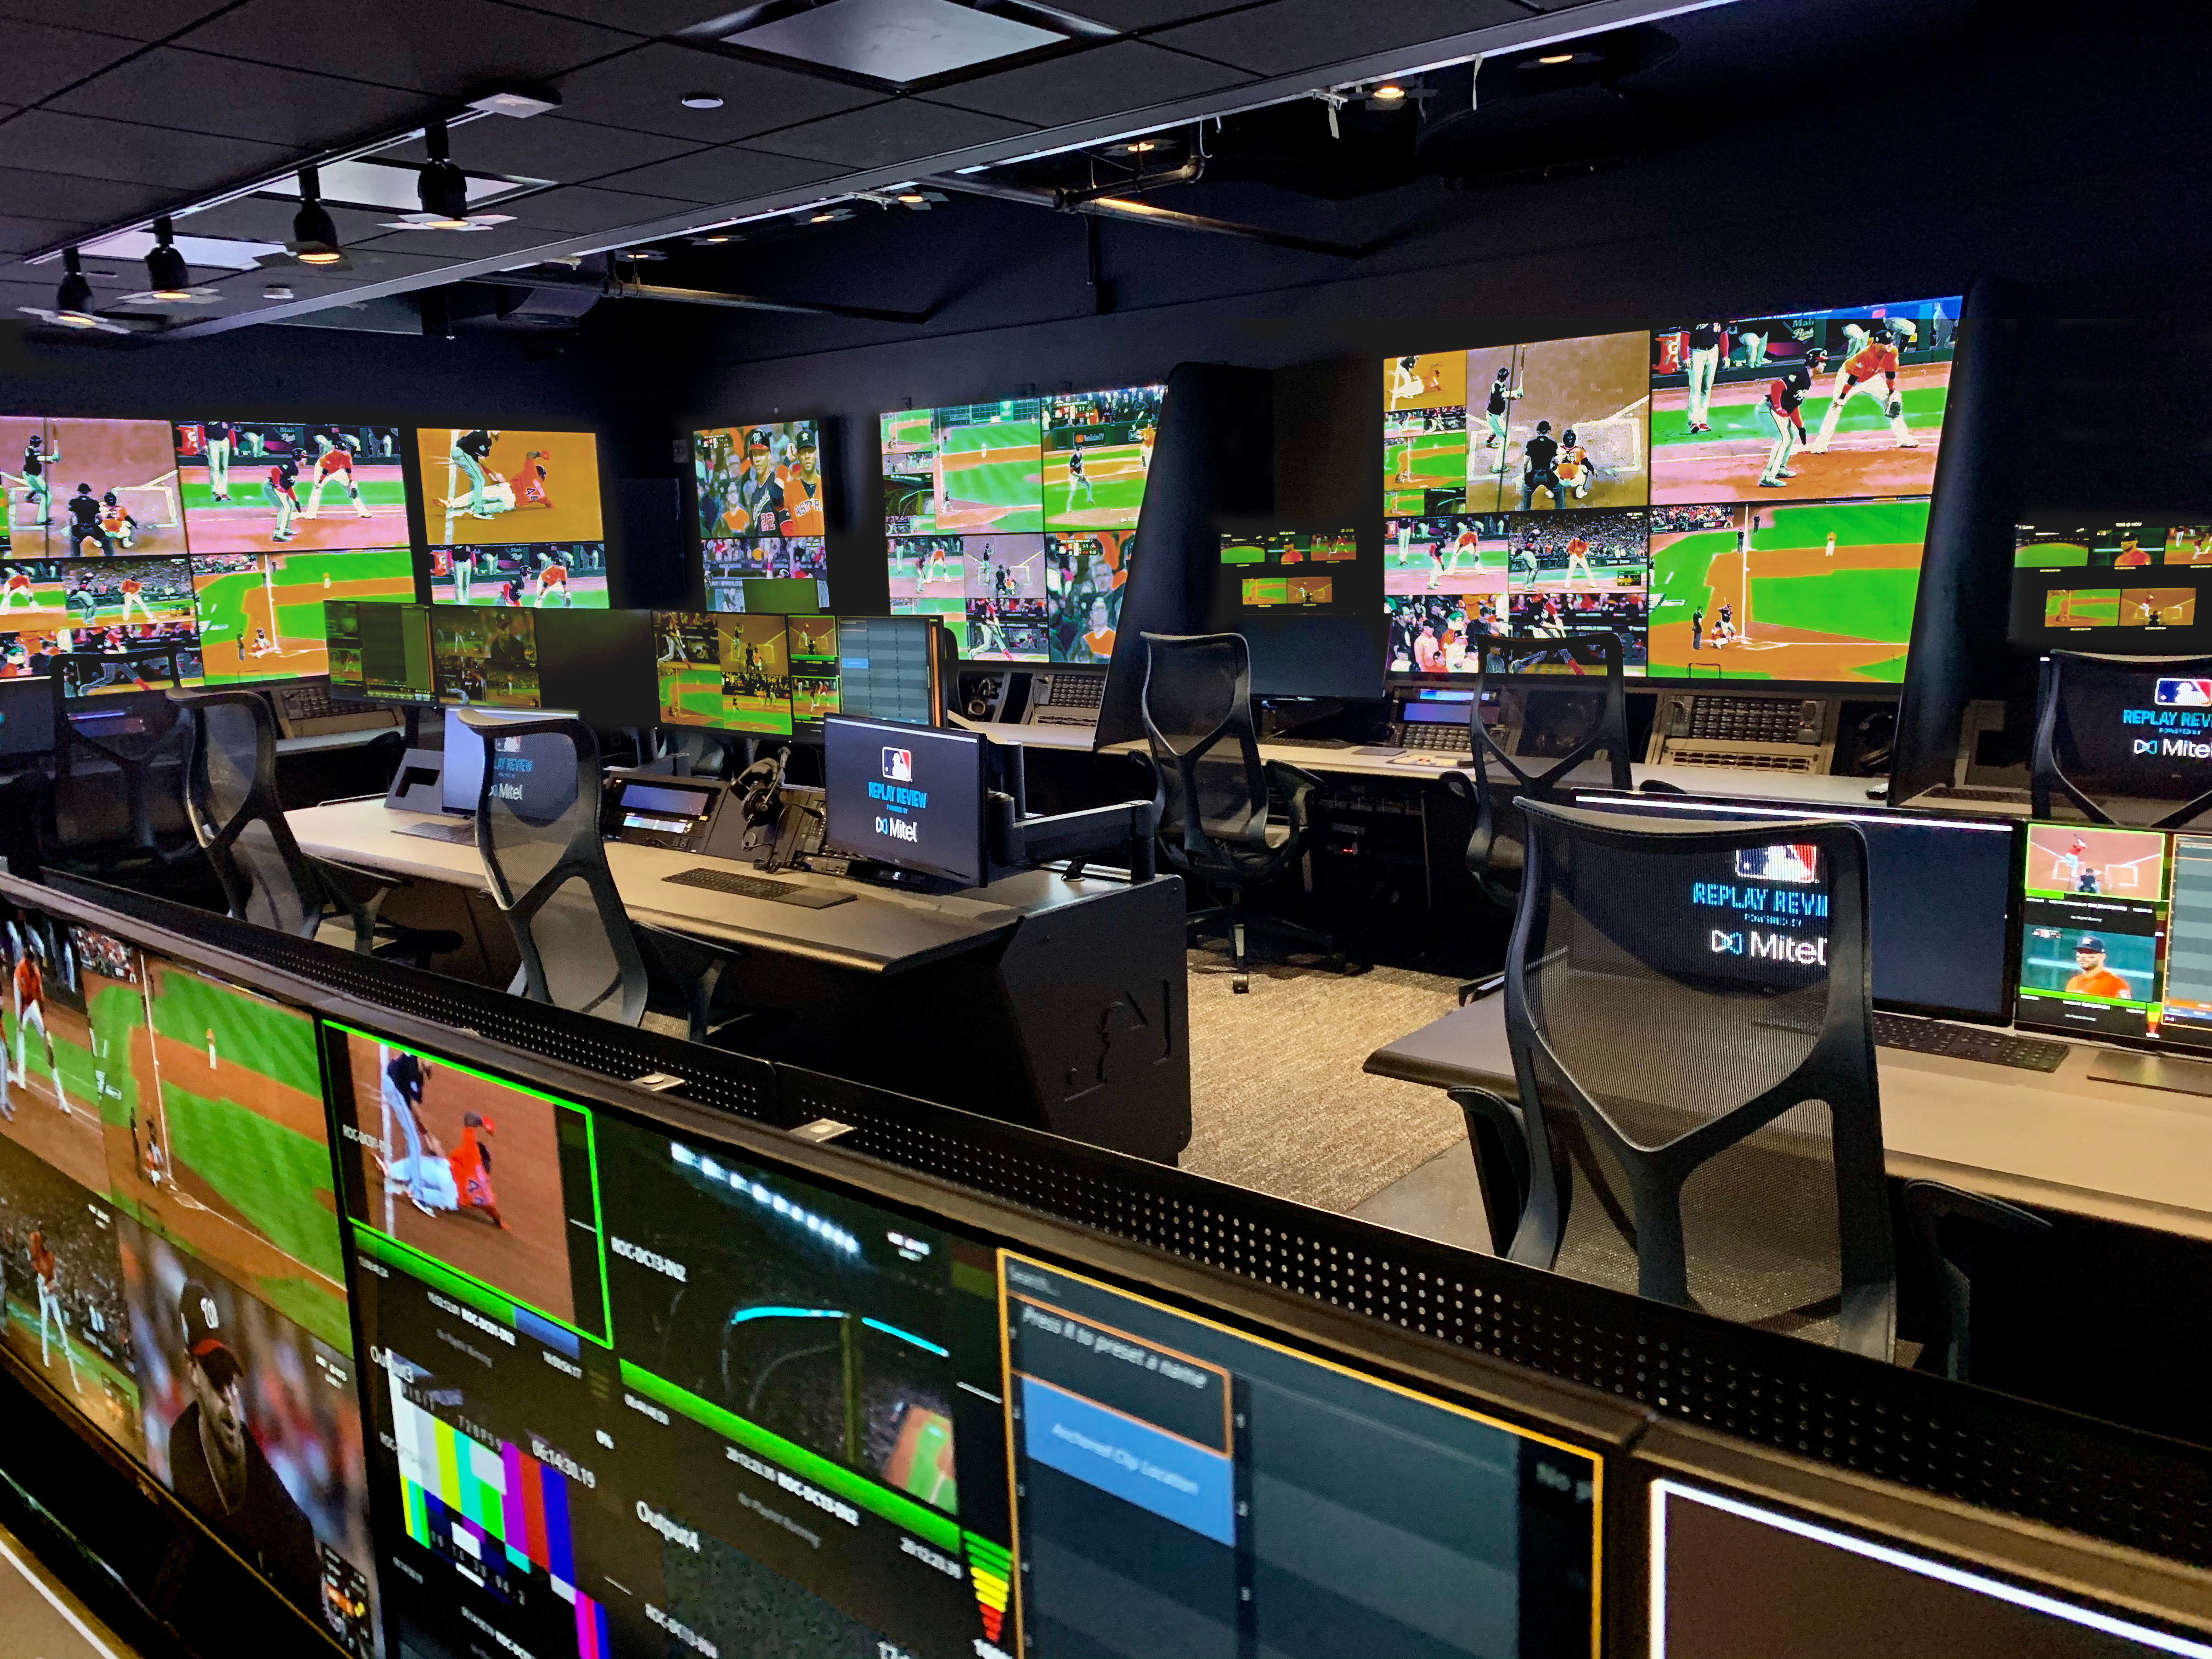 IV. Comparison of Major TV Networks in MLB Broadcasting